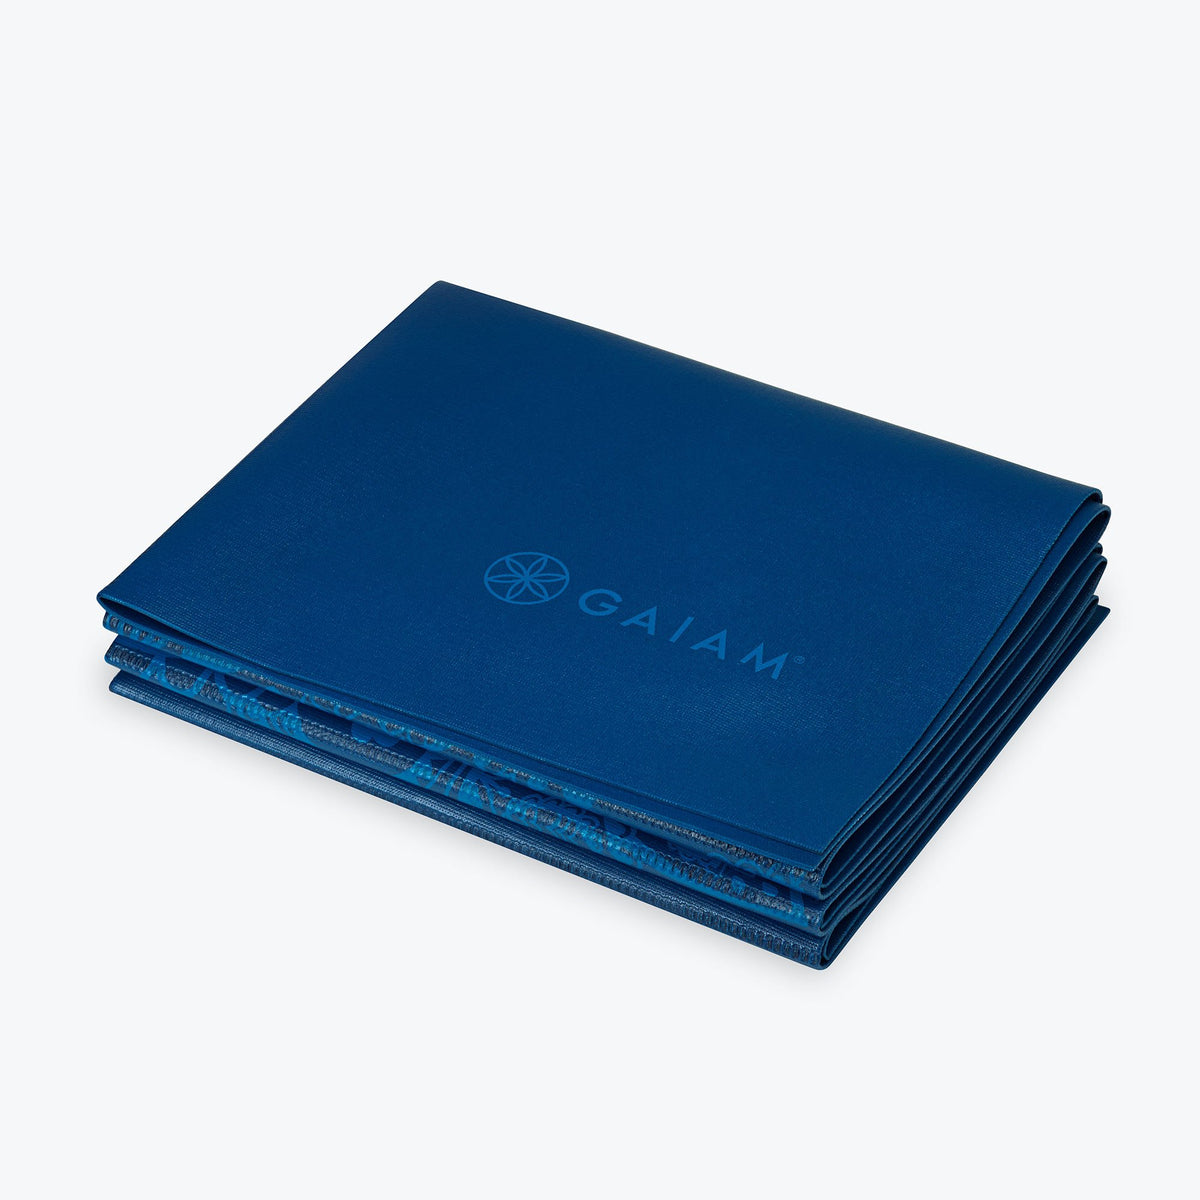 Gaiam Blue Sundial Foldable Yoga Mat (2mm) folded up